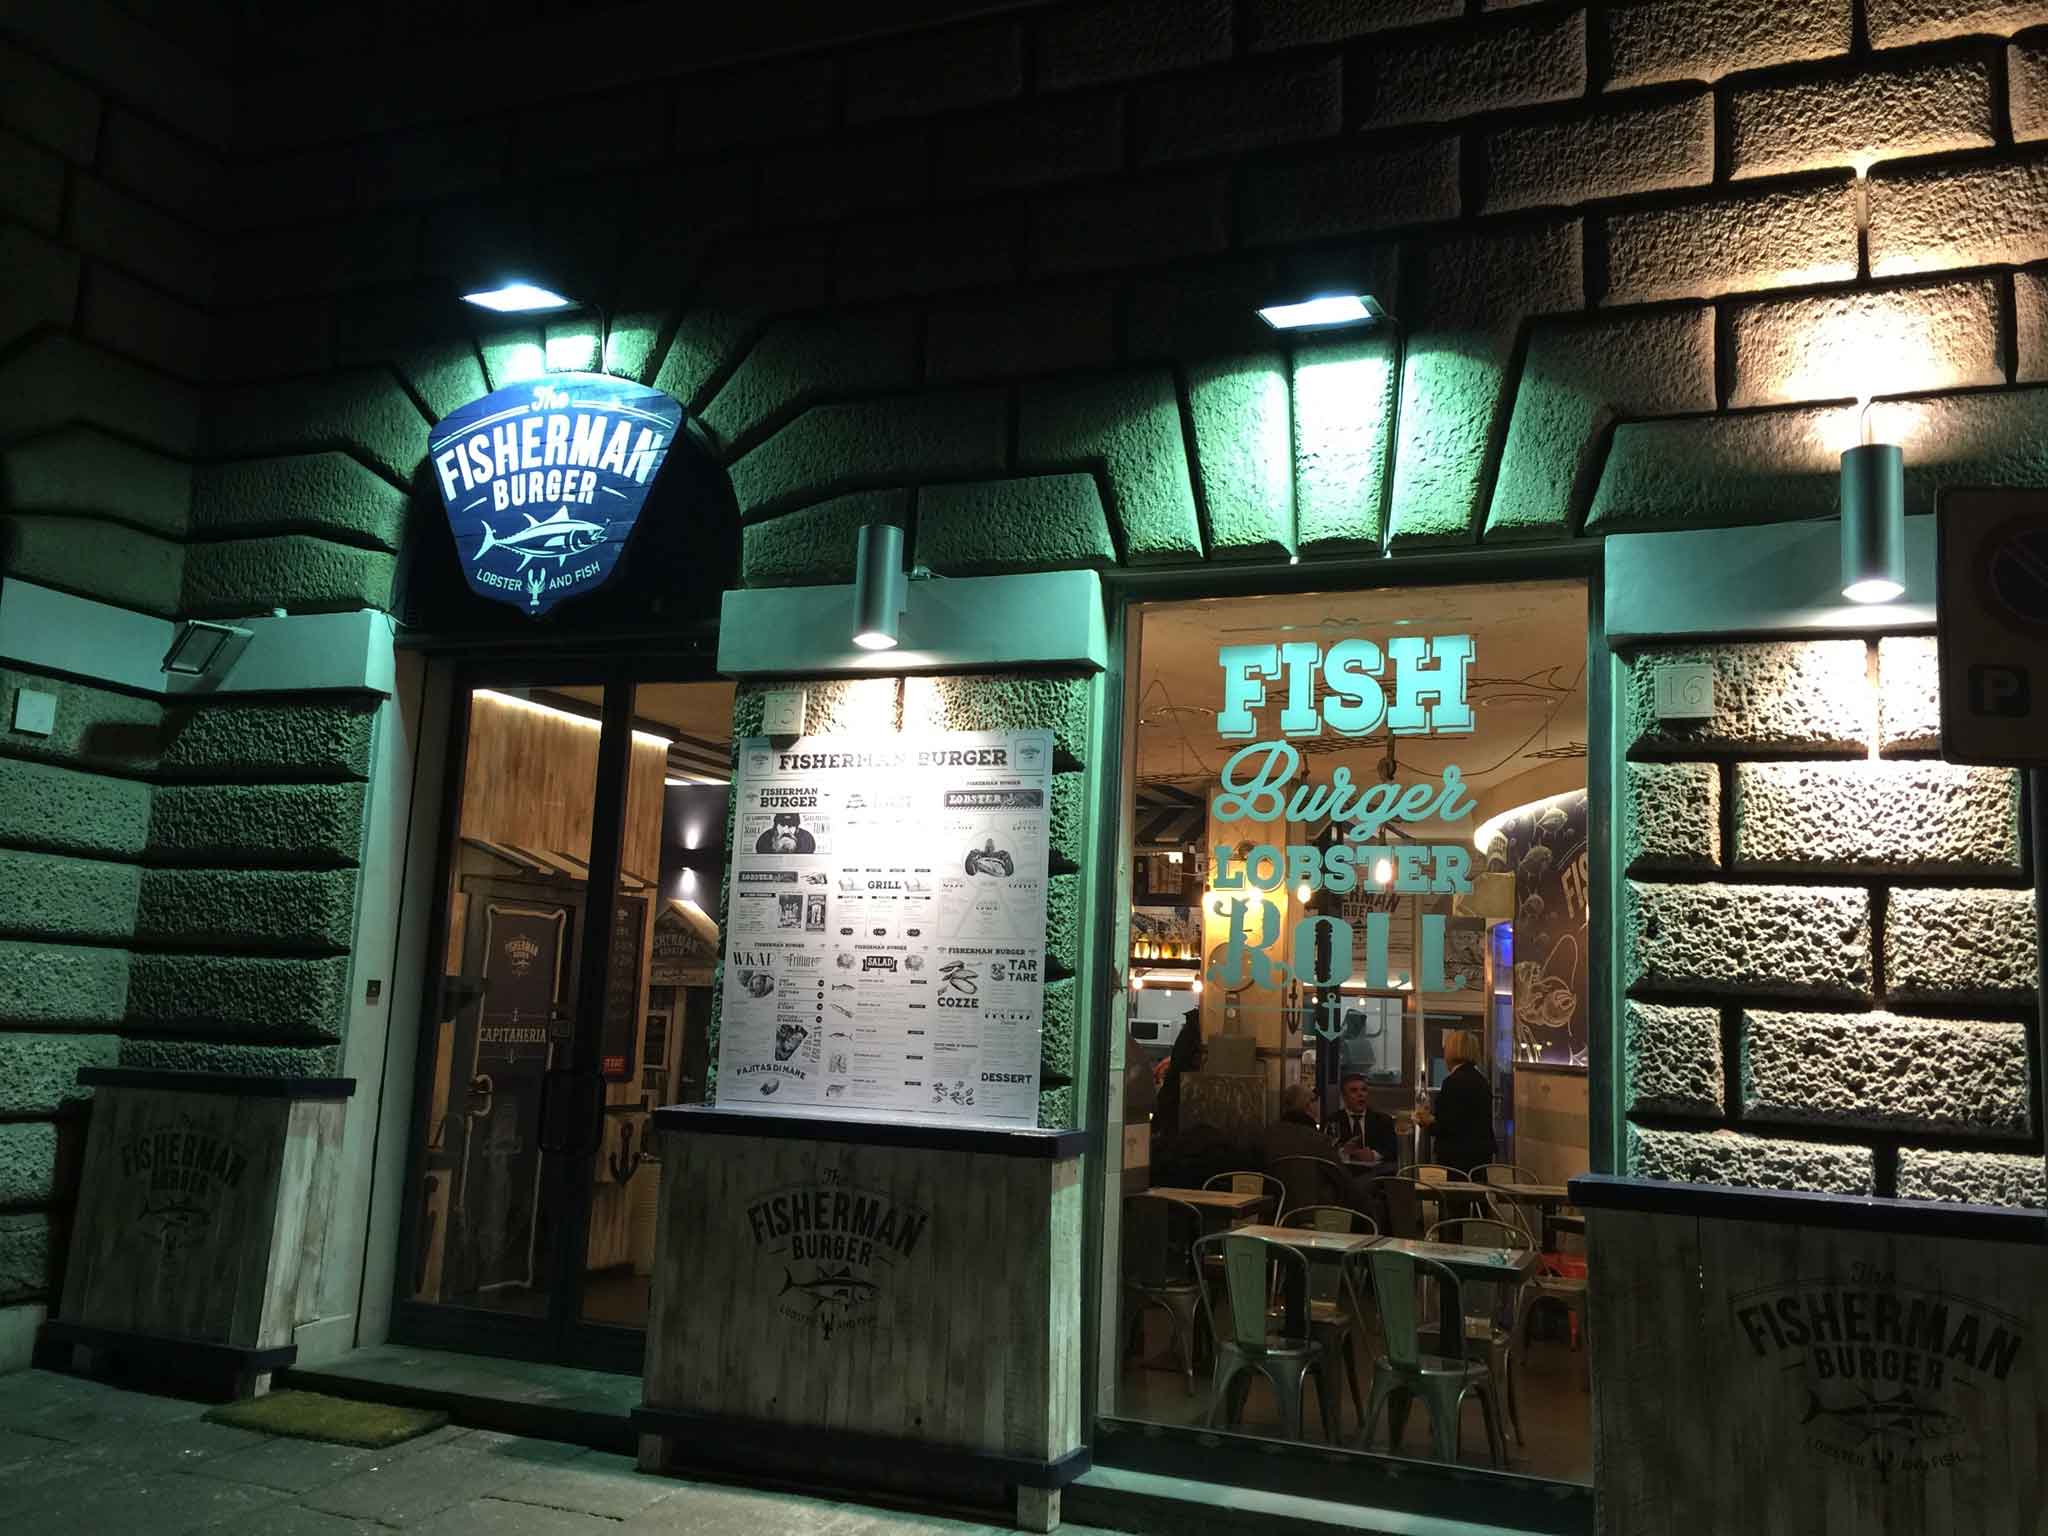 Fisherman Burger Roma